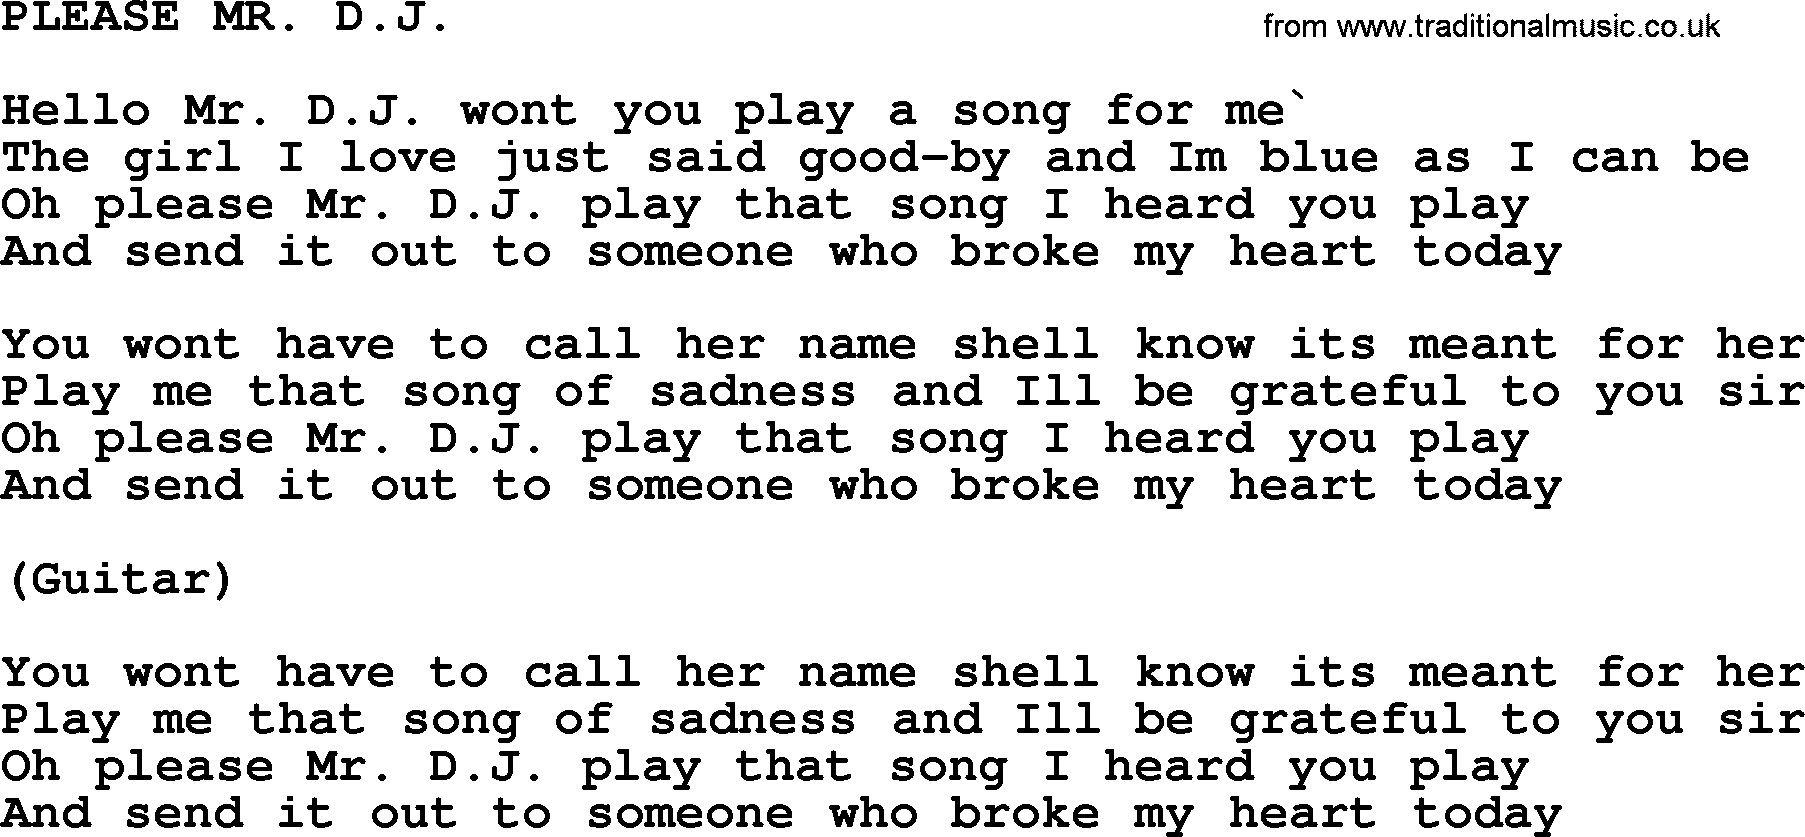 Merle Haggard song: Please Mr D J , lyrics.